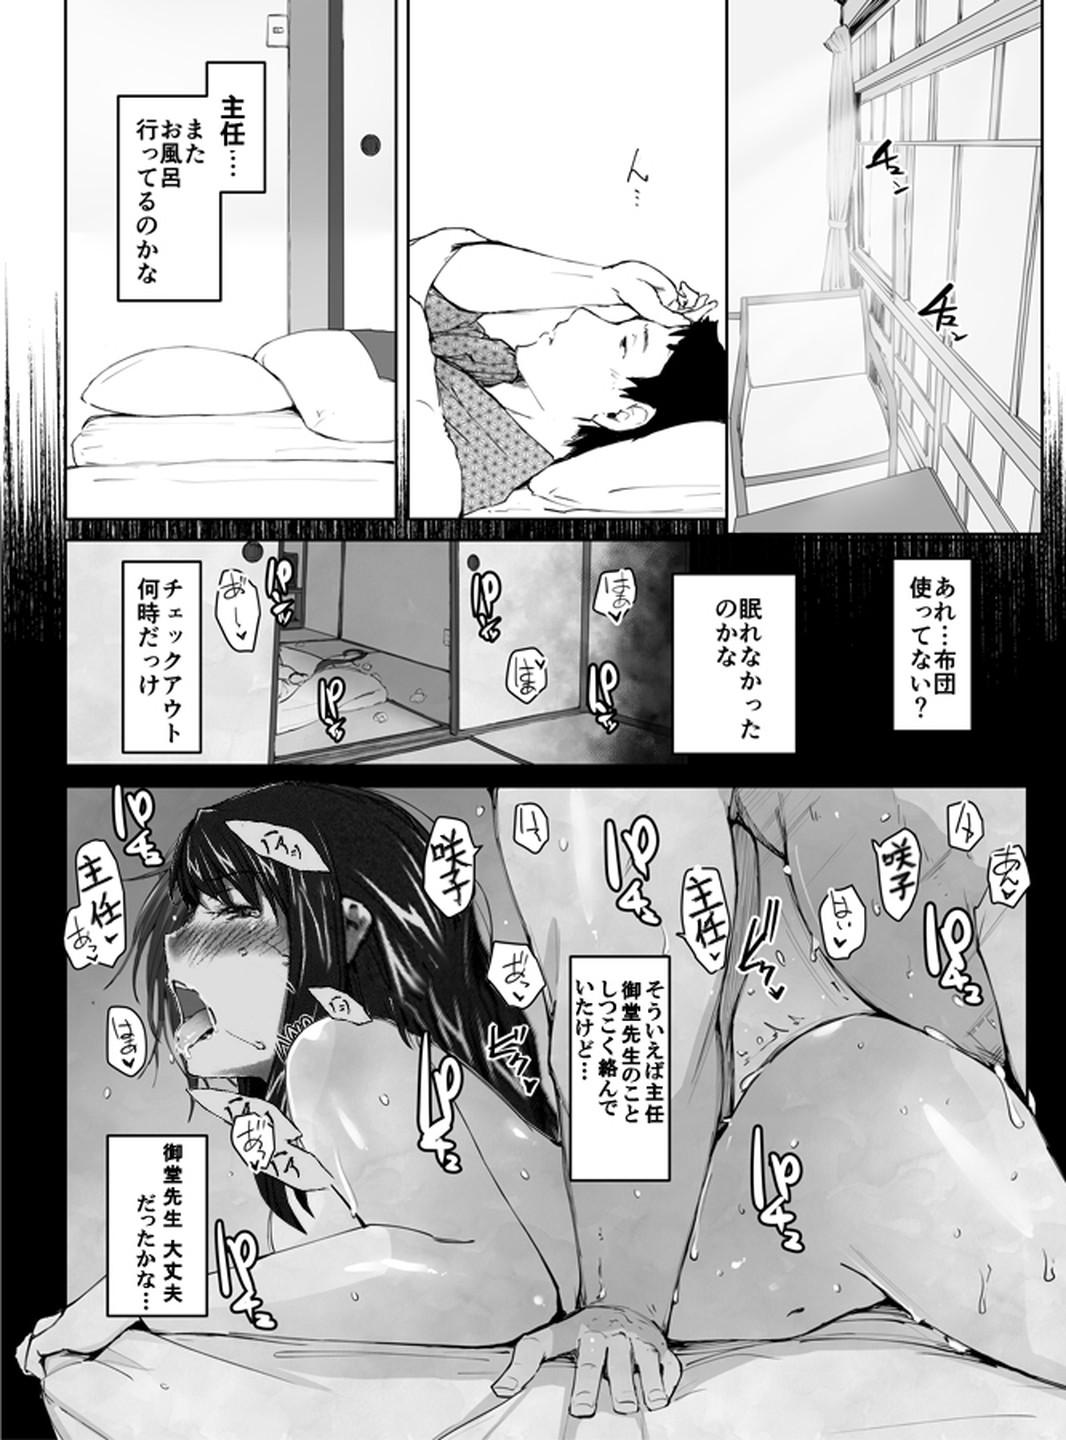 Sakiko-san in delusion Vol.1 Ver.1.1 ~Sakiko-san's circumstance at an educational training~ Stupid Sakiko (collage) on-going 105